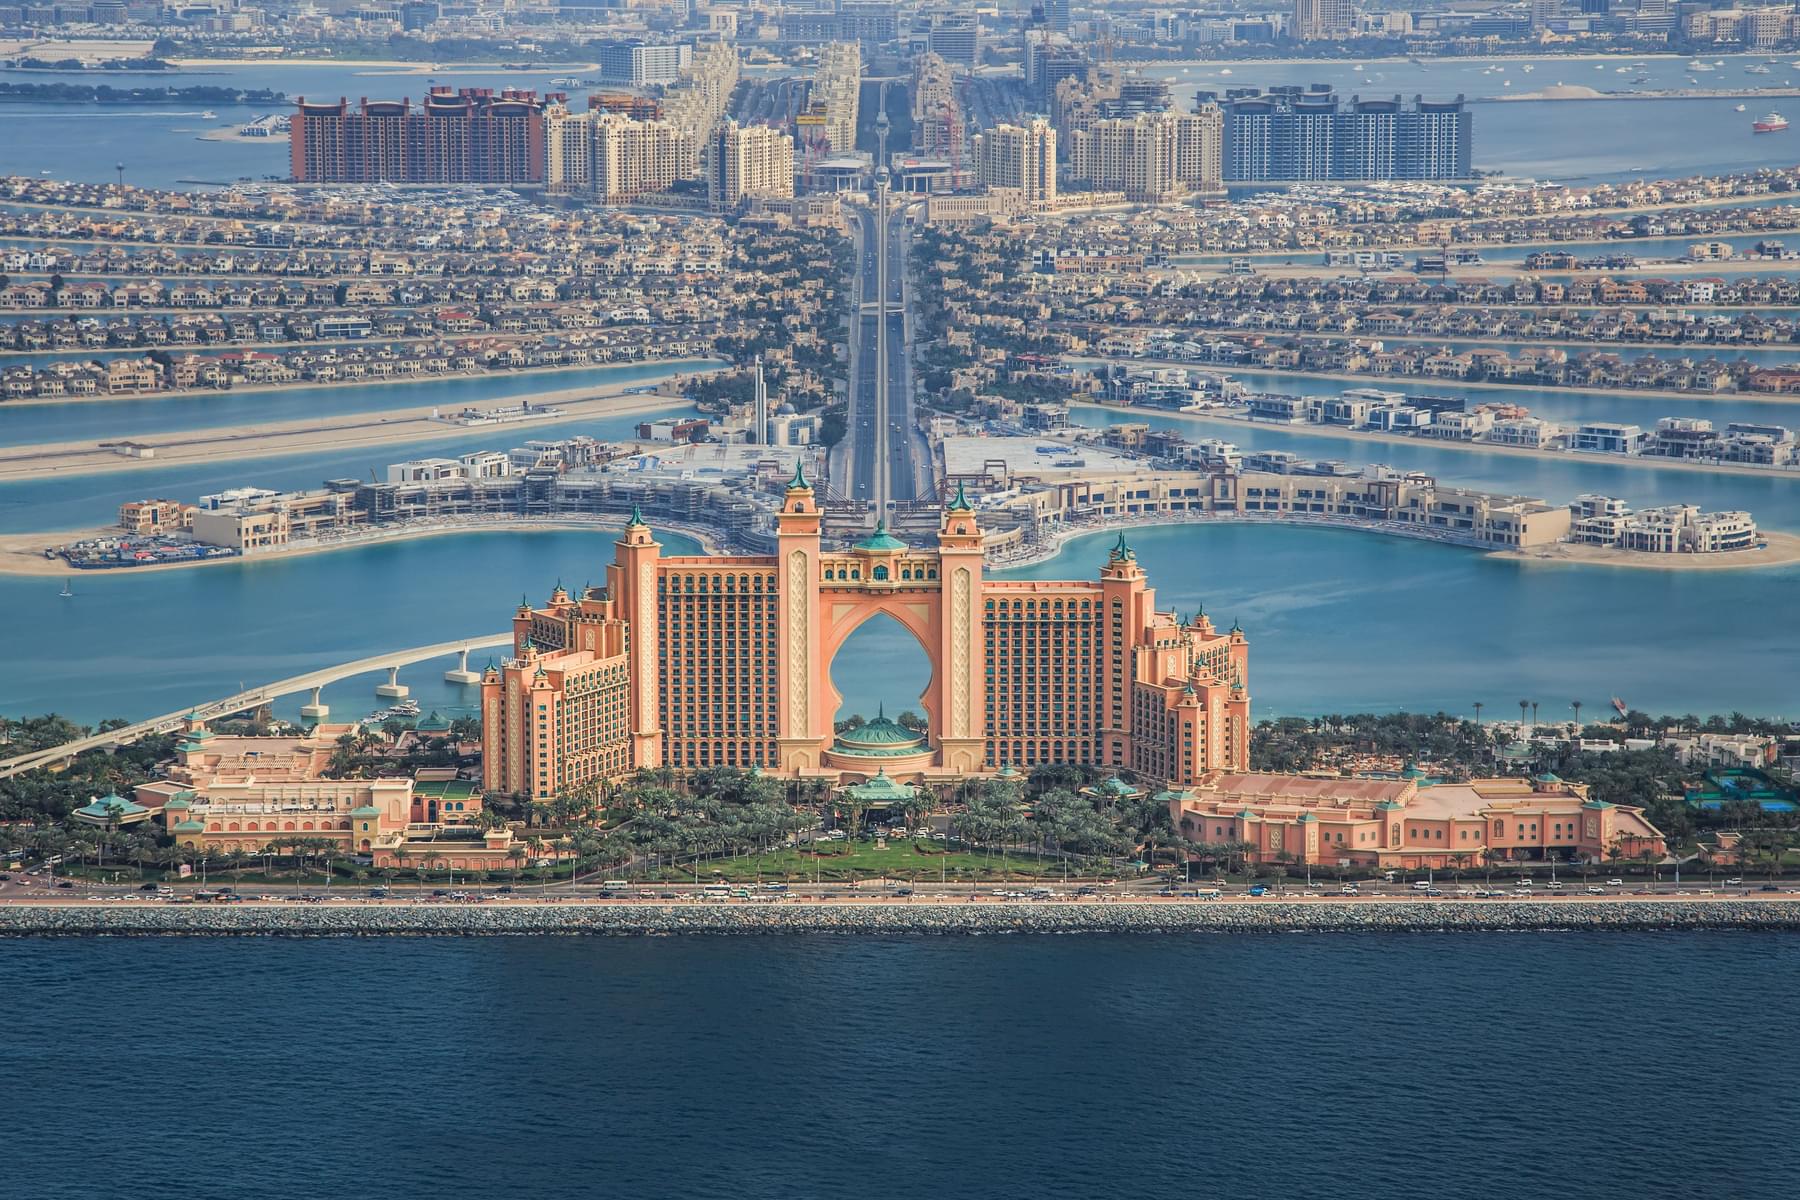 Why To Visit The Atlantis Dubai?